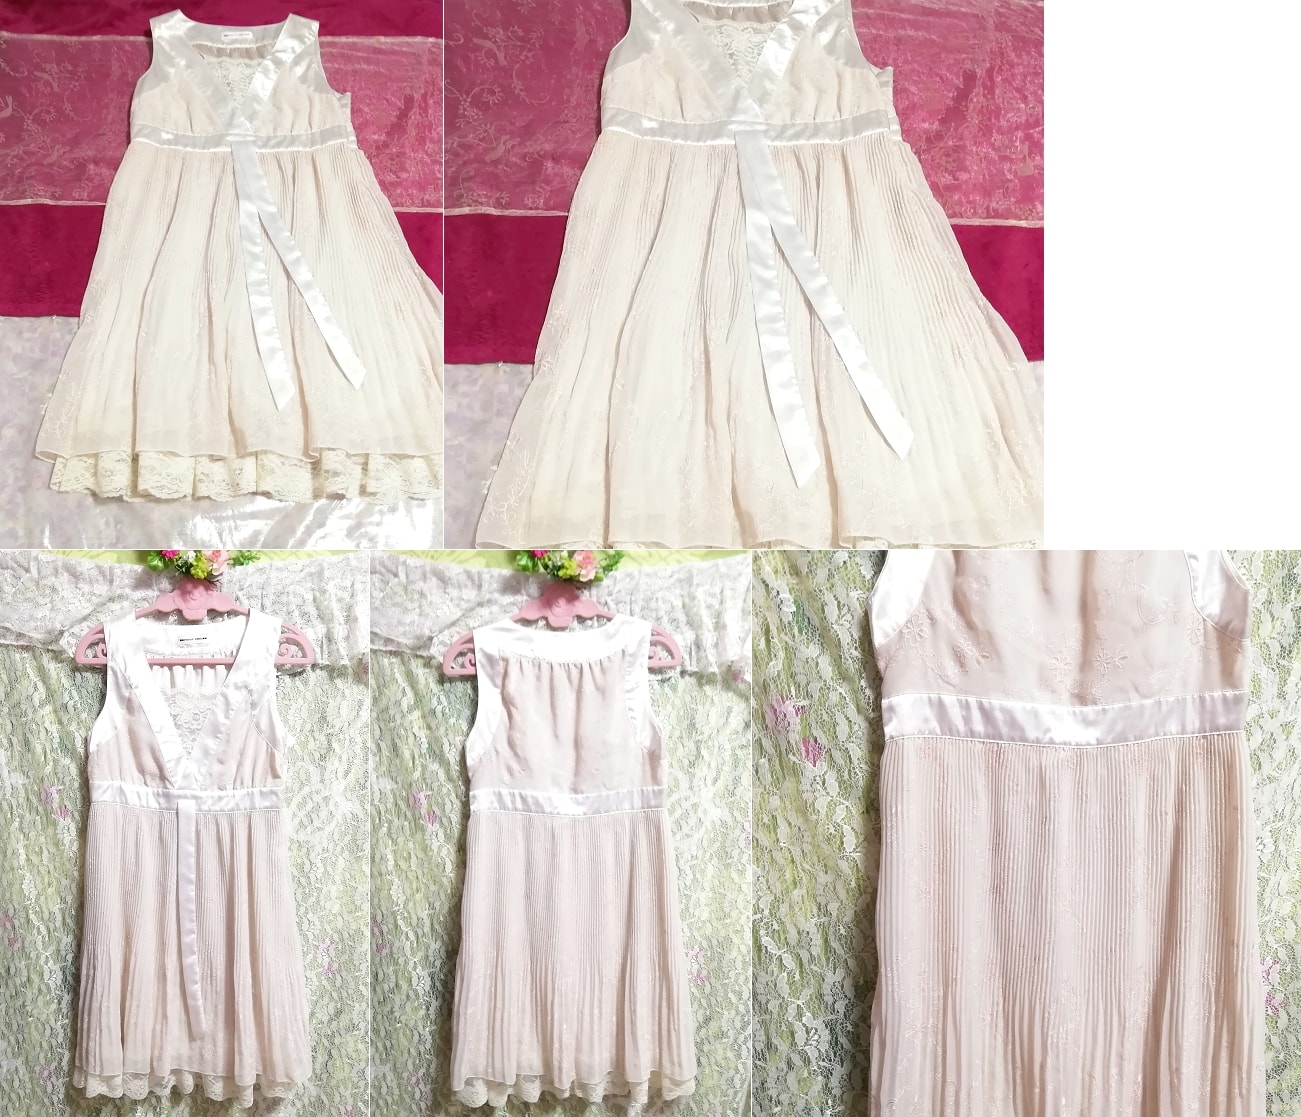 Ivory white satin ribbon sleeveless negligee nightgown dress, knee length skirt, m size